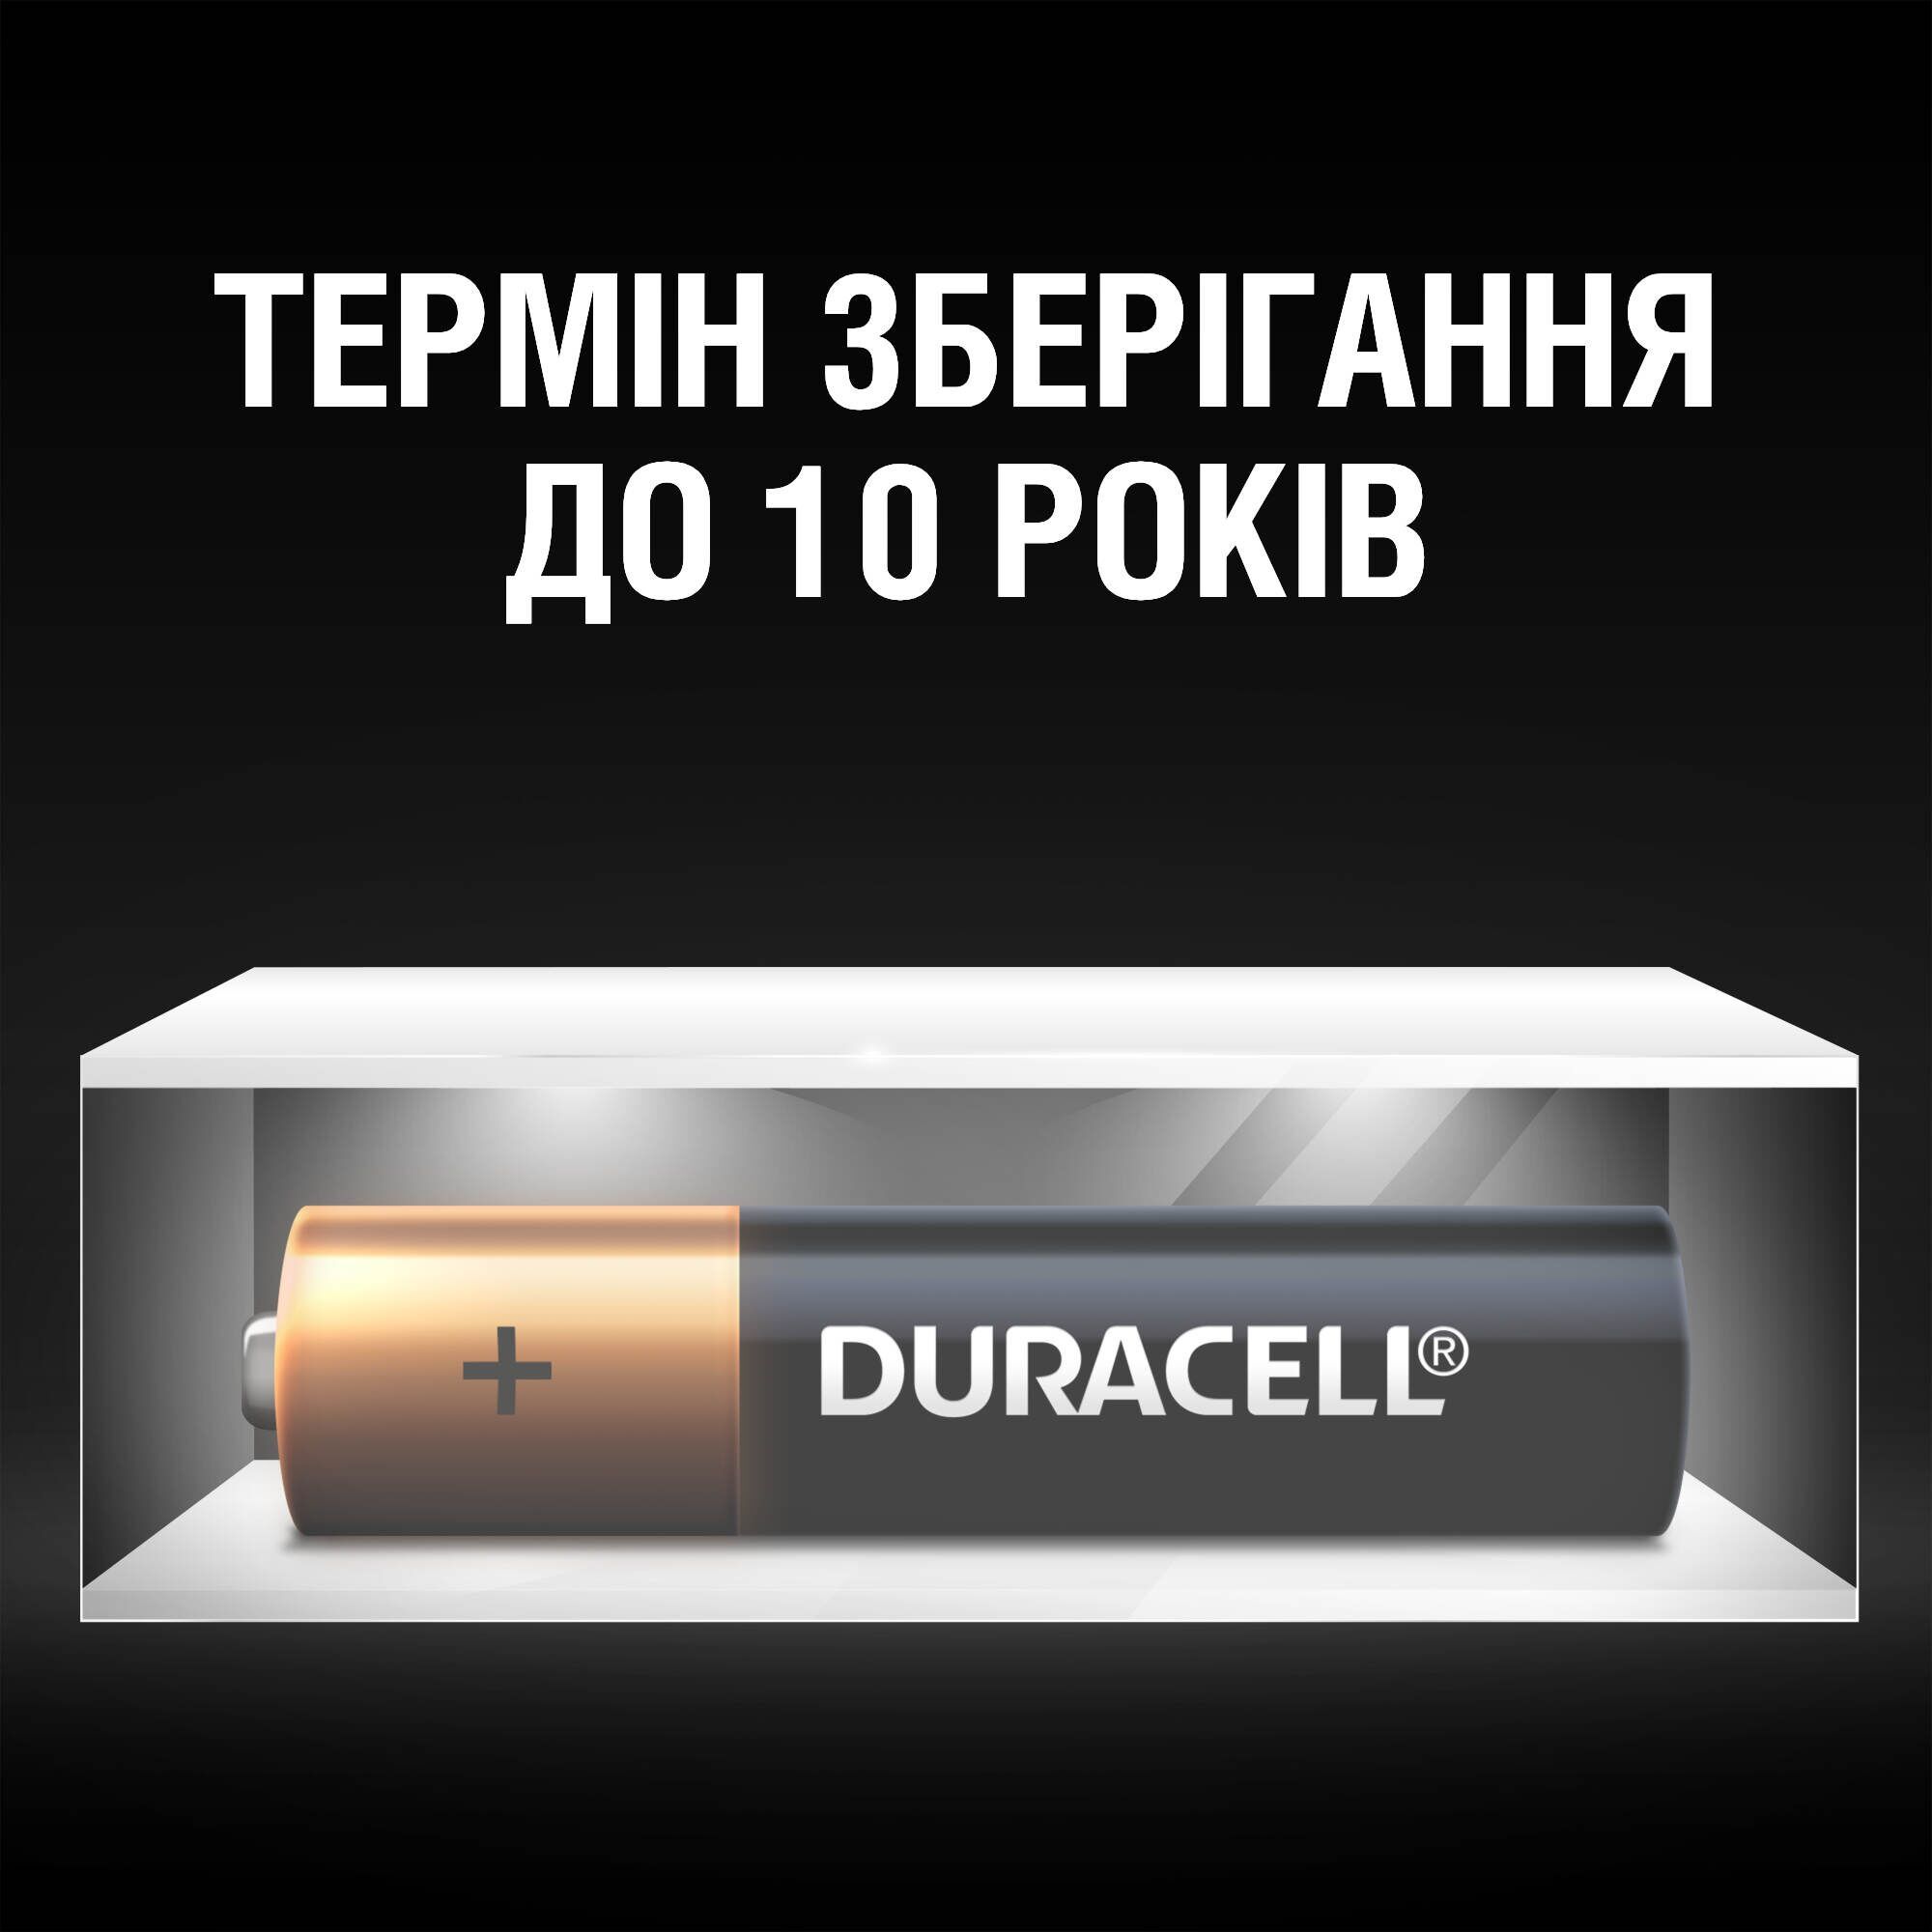 Щелочные батарейки мизинчиковые Duracell 1.5 V AAA LR03/MN2400, 8 шт. (706051) - фото 6